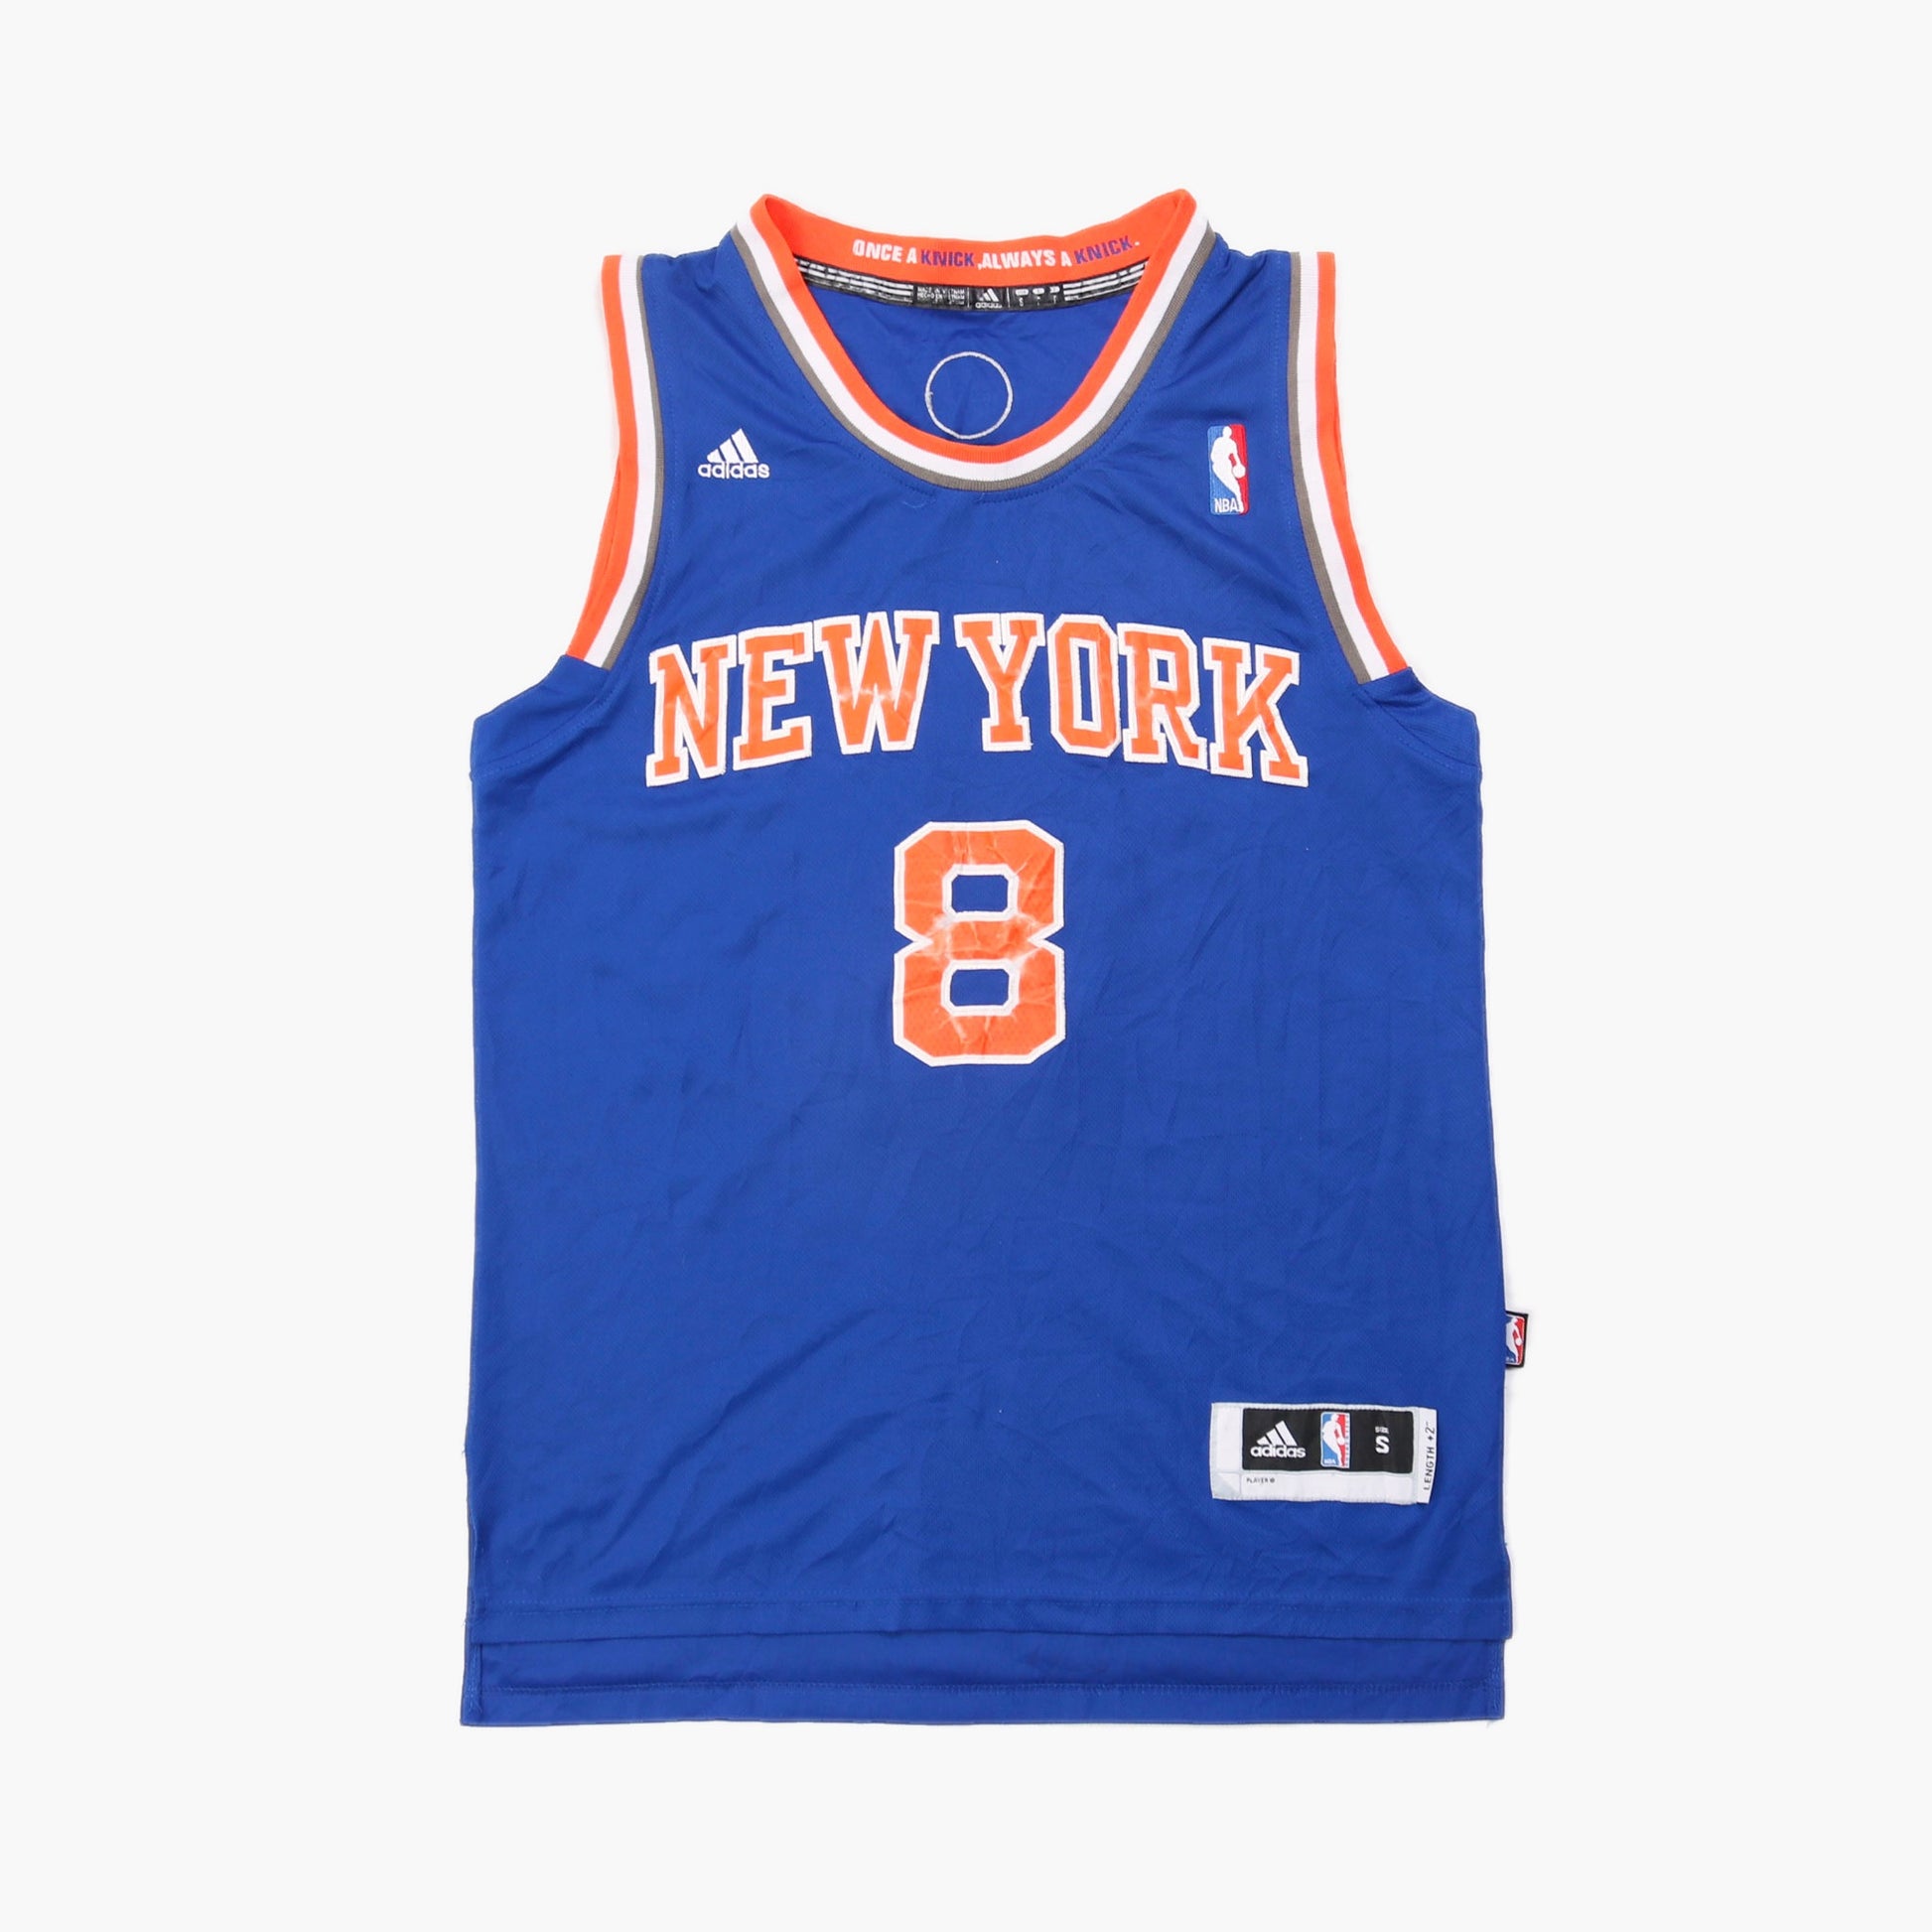 Adidas New York Knicks Swingman Jersey Size L